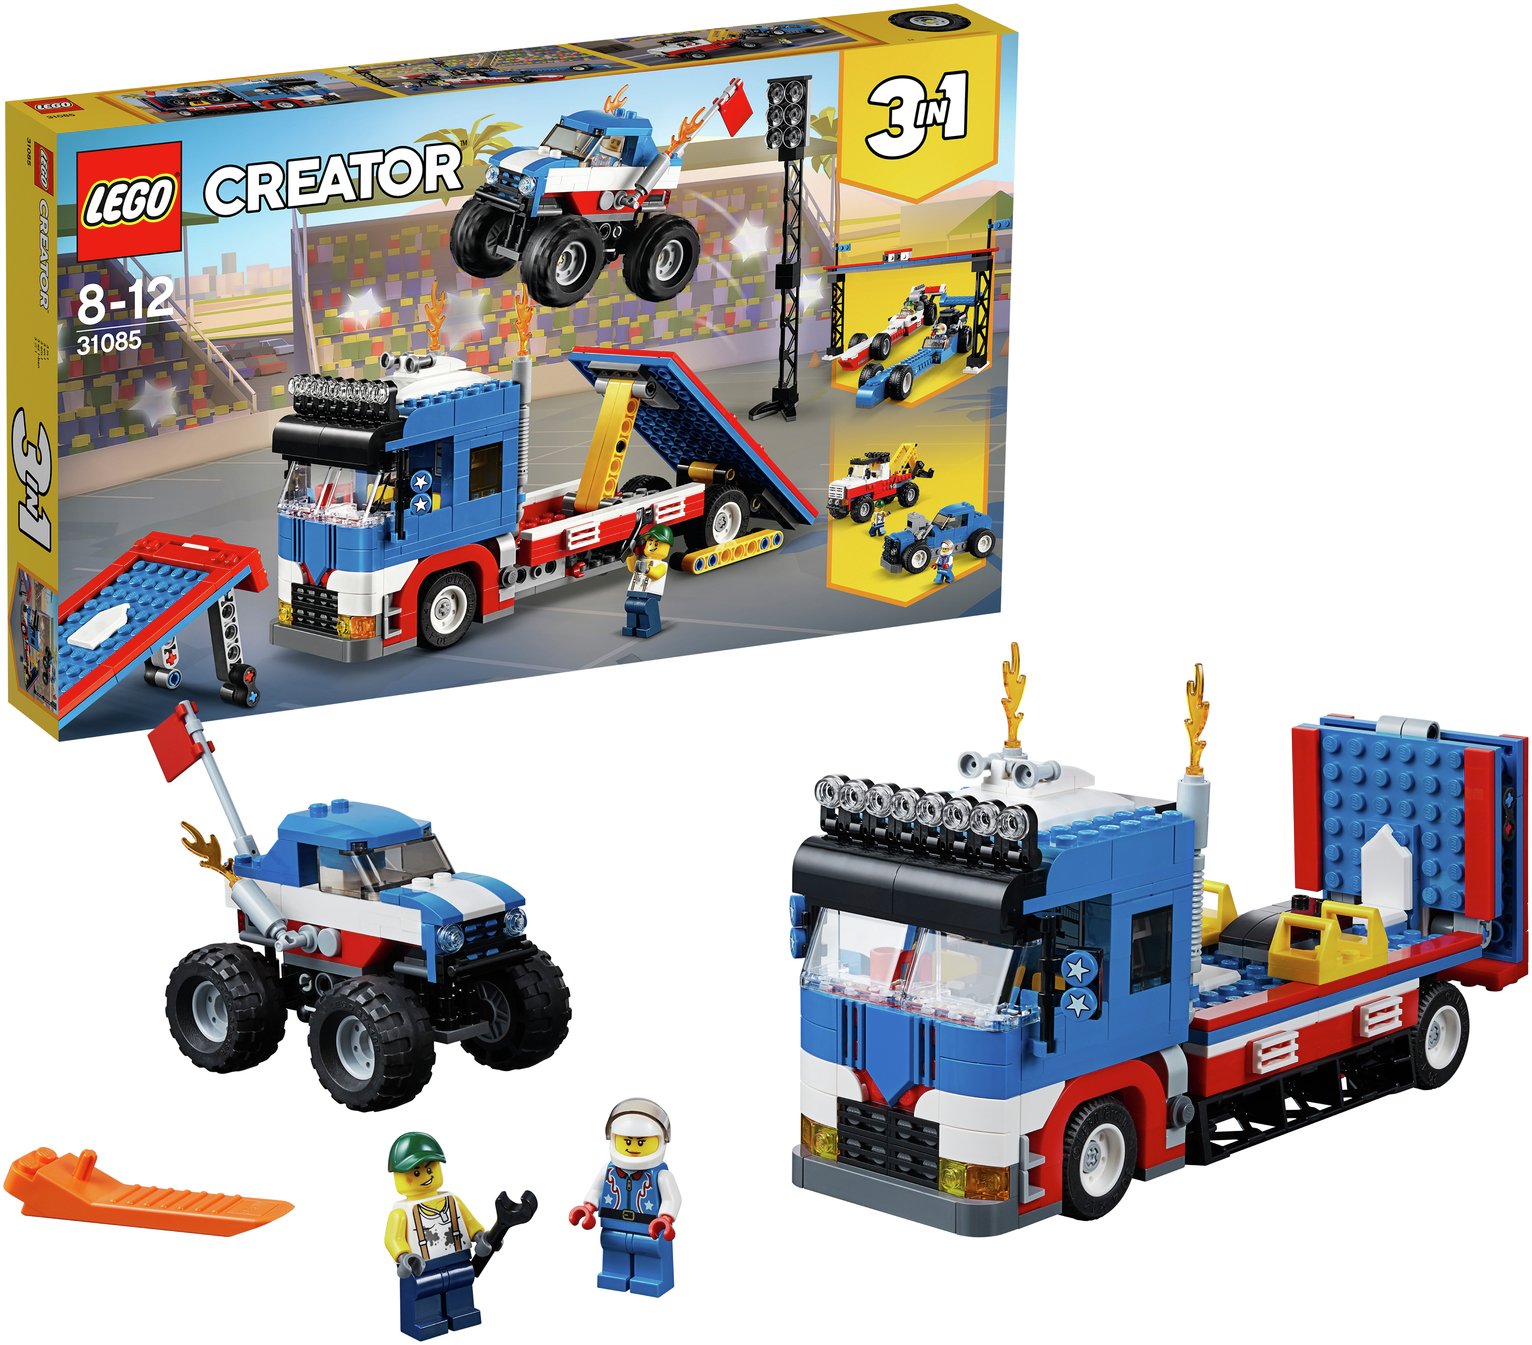 LEGO Creator Mobile Stunt Show - 31085